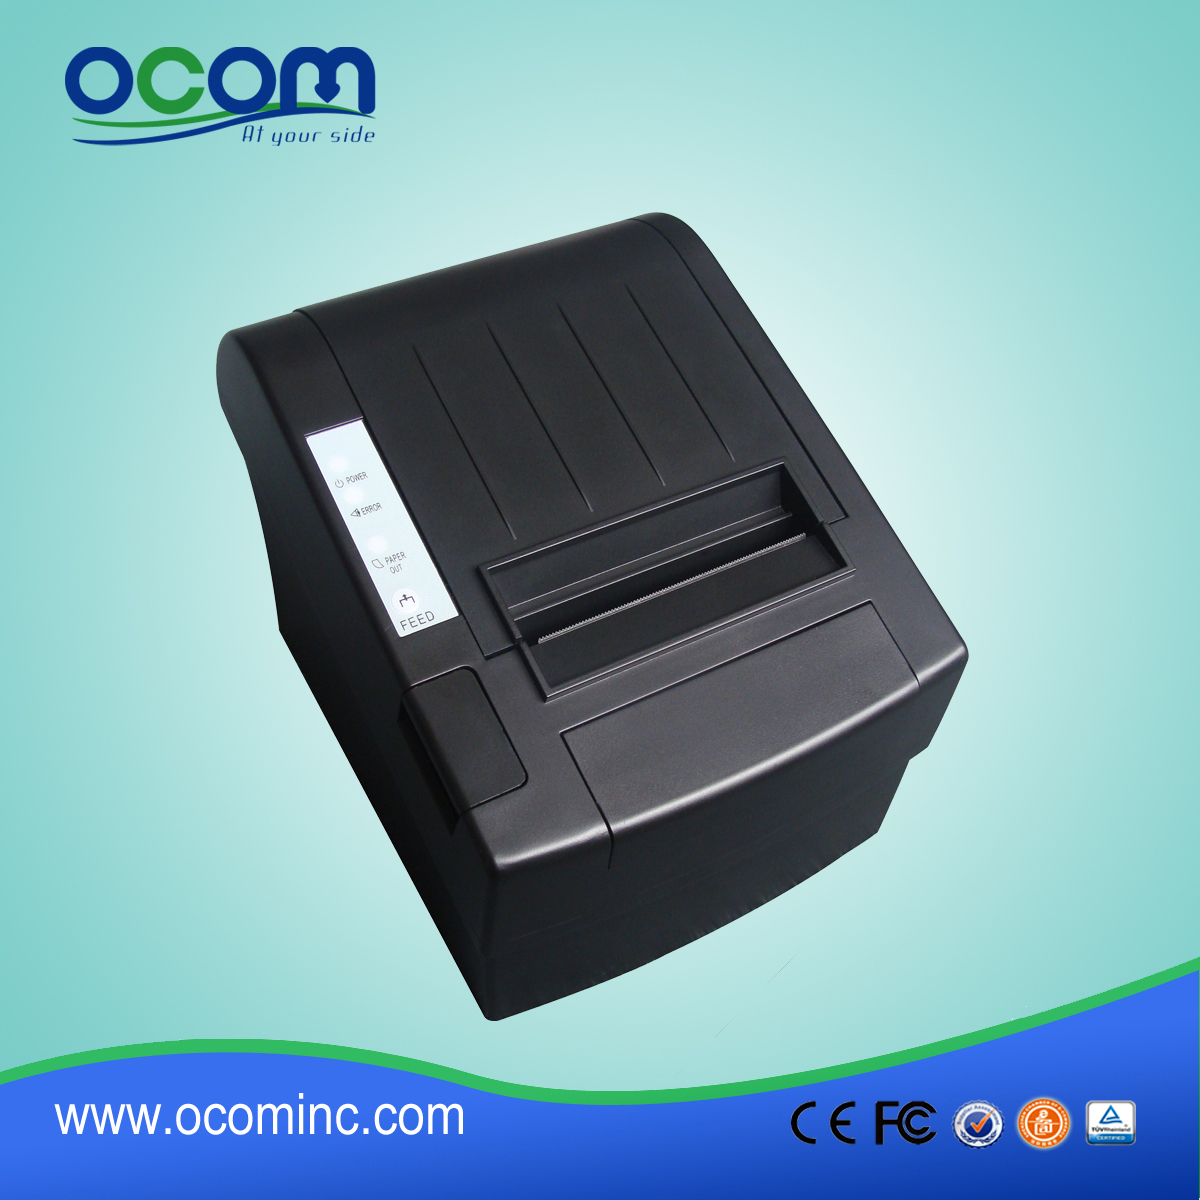 OCPP-806-URL: 300毫米每秒打印速度3接口80毫米热敏小票打印机